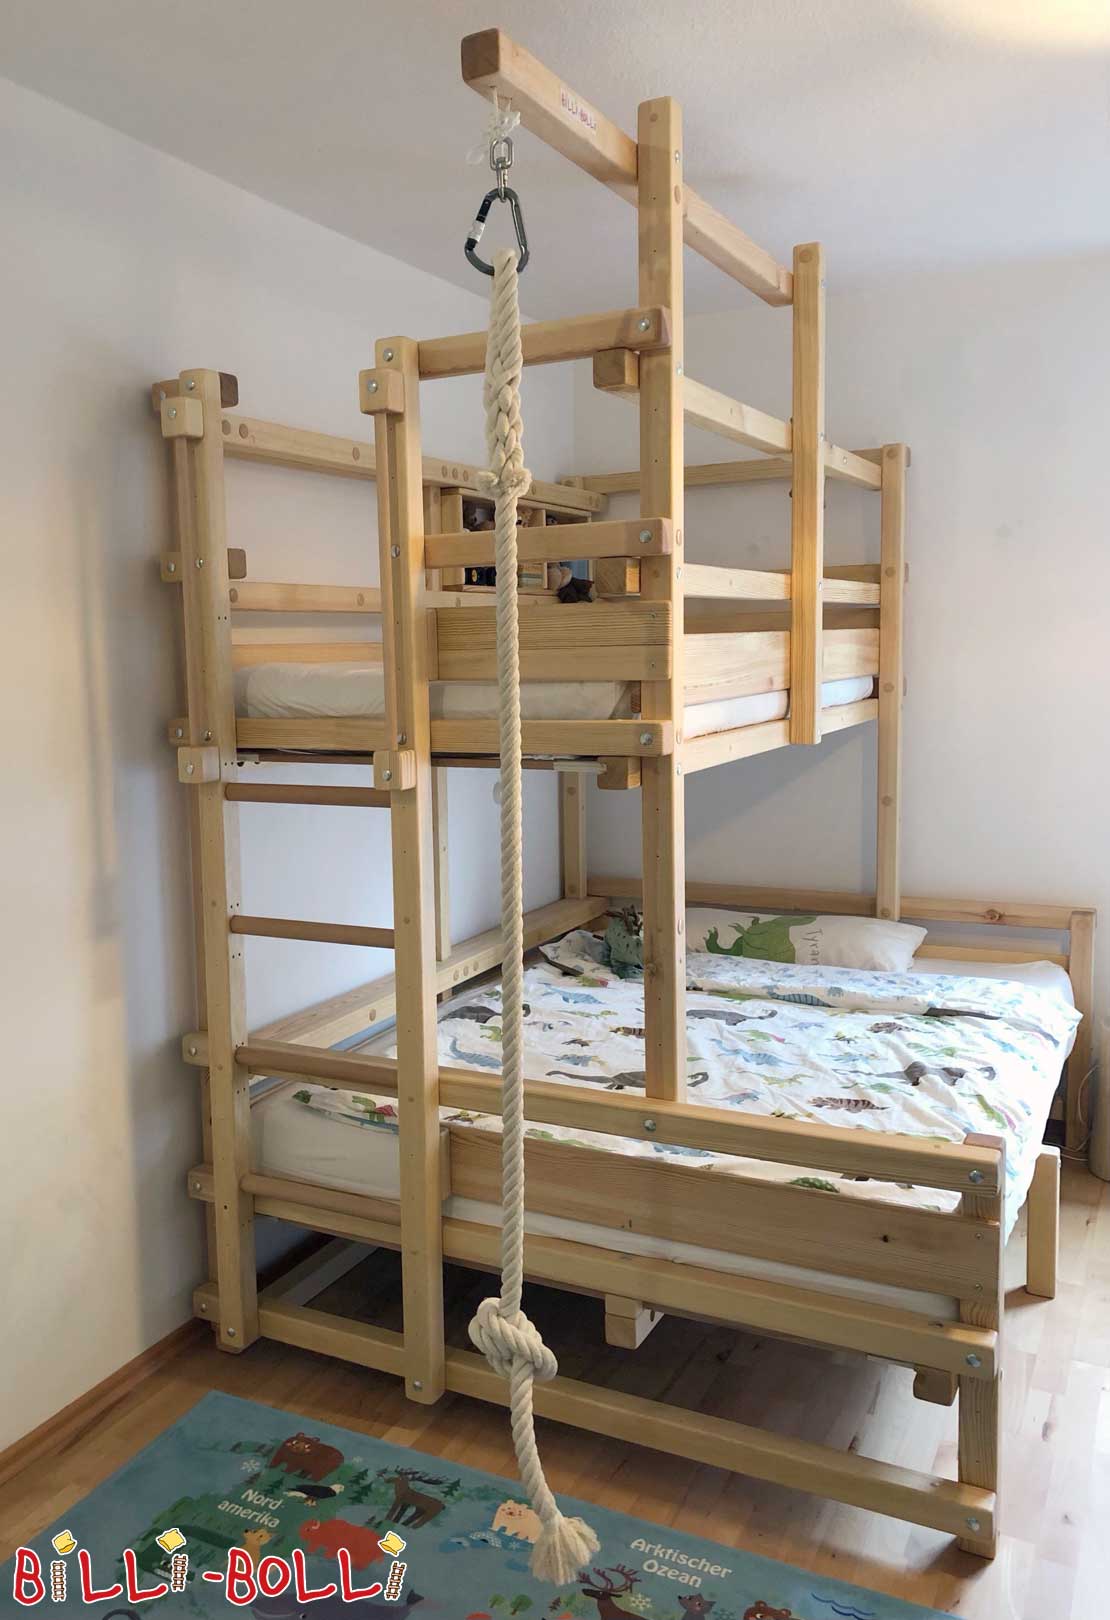 Beliche – a cama especial para crianças (Beliches)